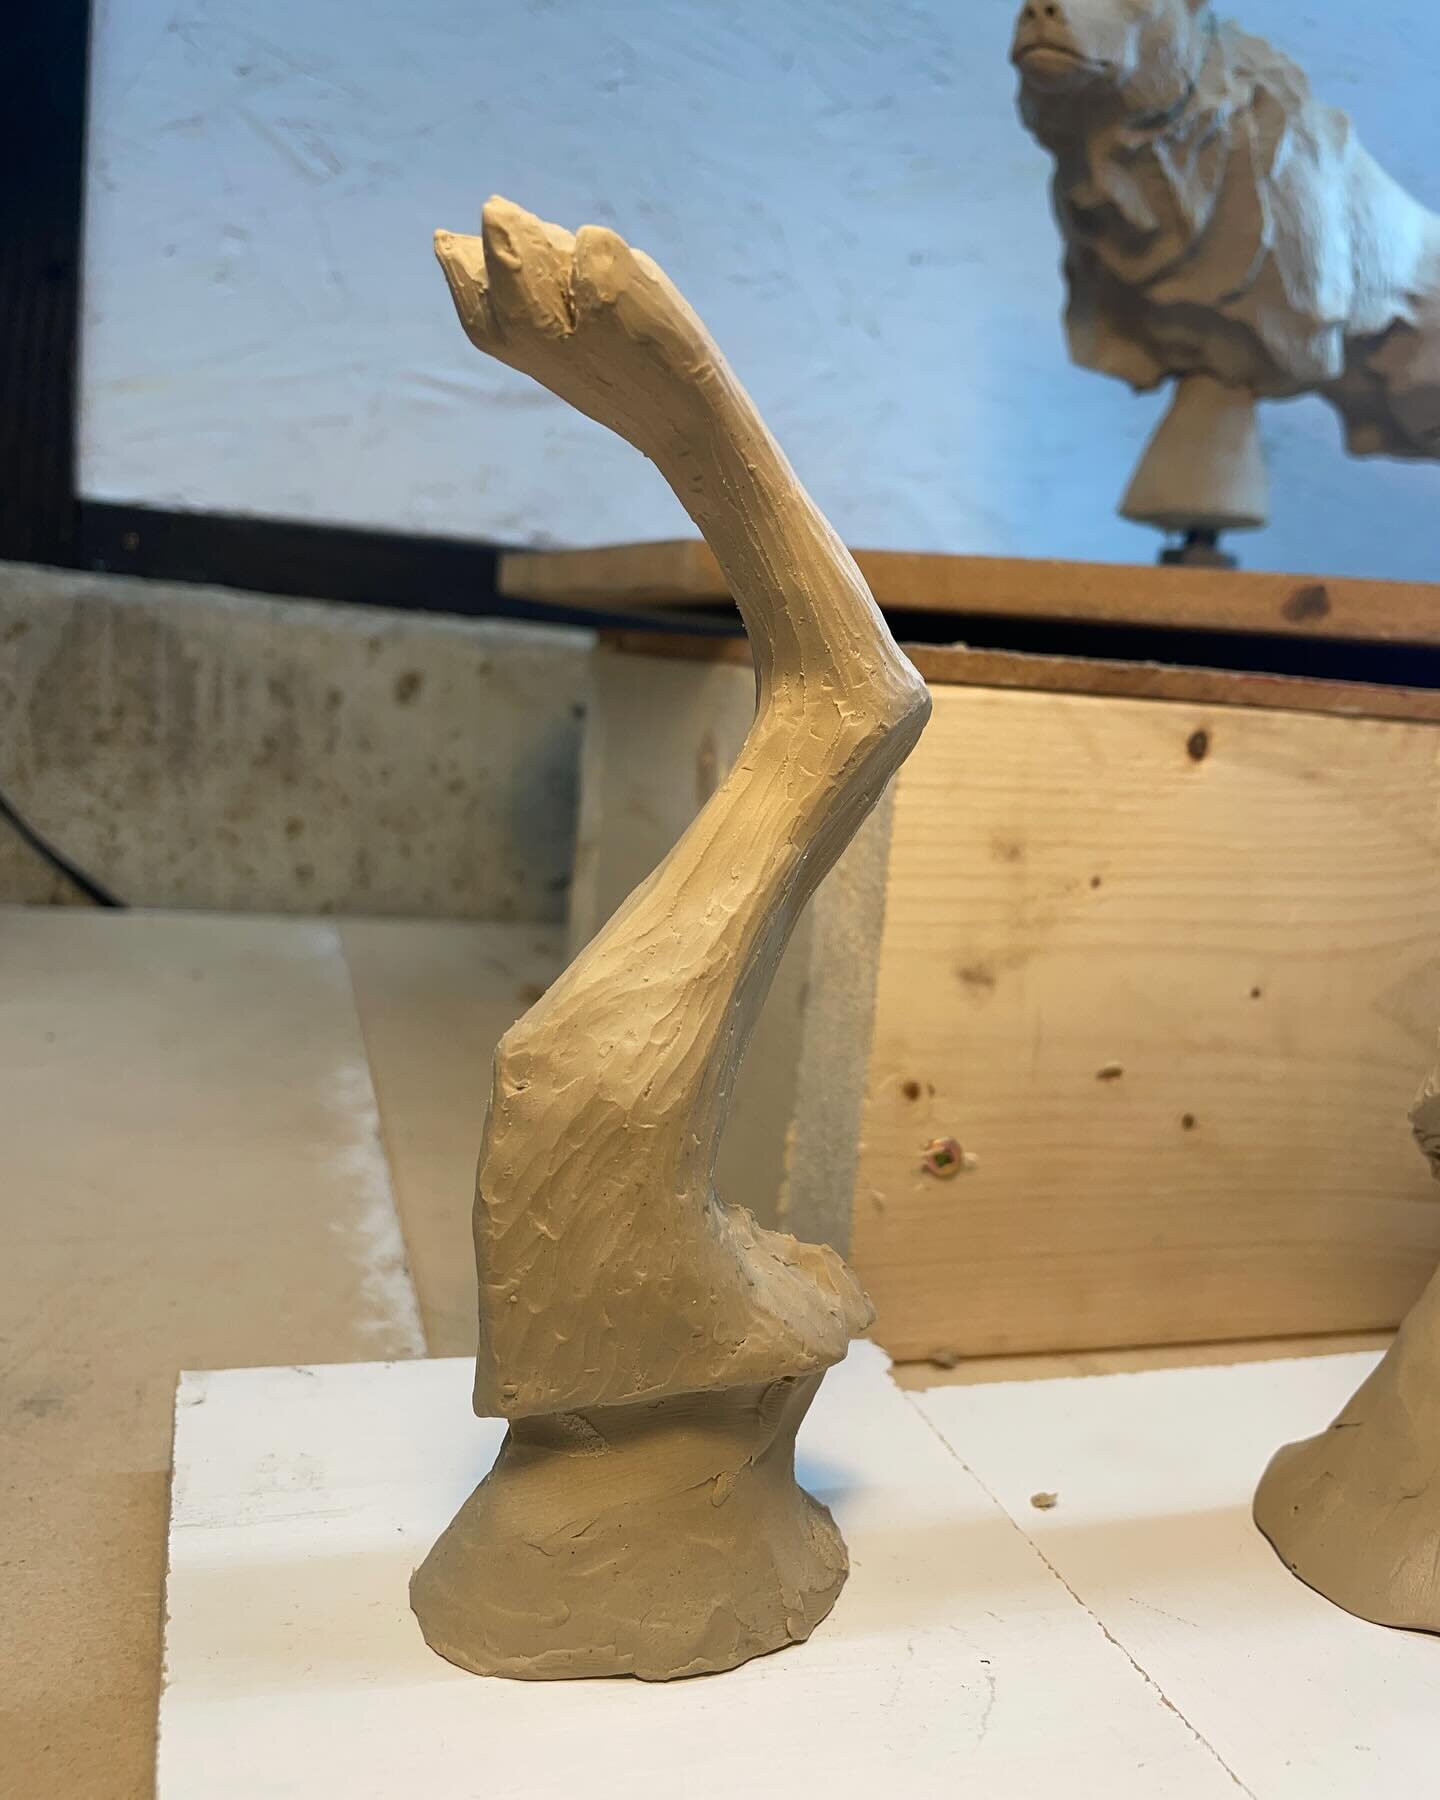 Moldmaking process for the coastal wolf.  Next up, wax casting.

#moldmaking #sculpture #wolfart #siliconemolds #artistsforconservation #conservation #wildlife #vancouverisland